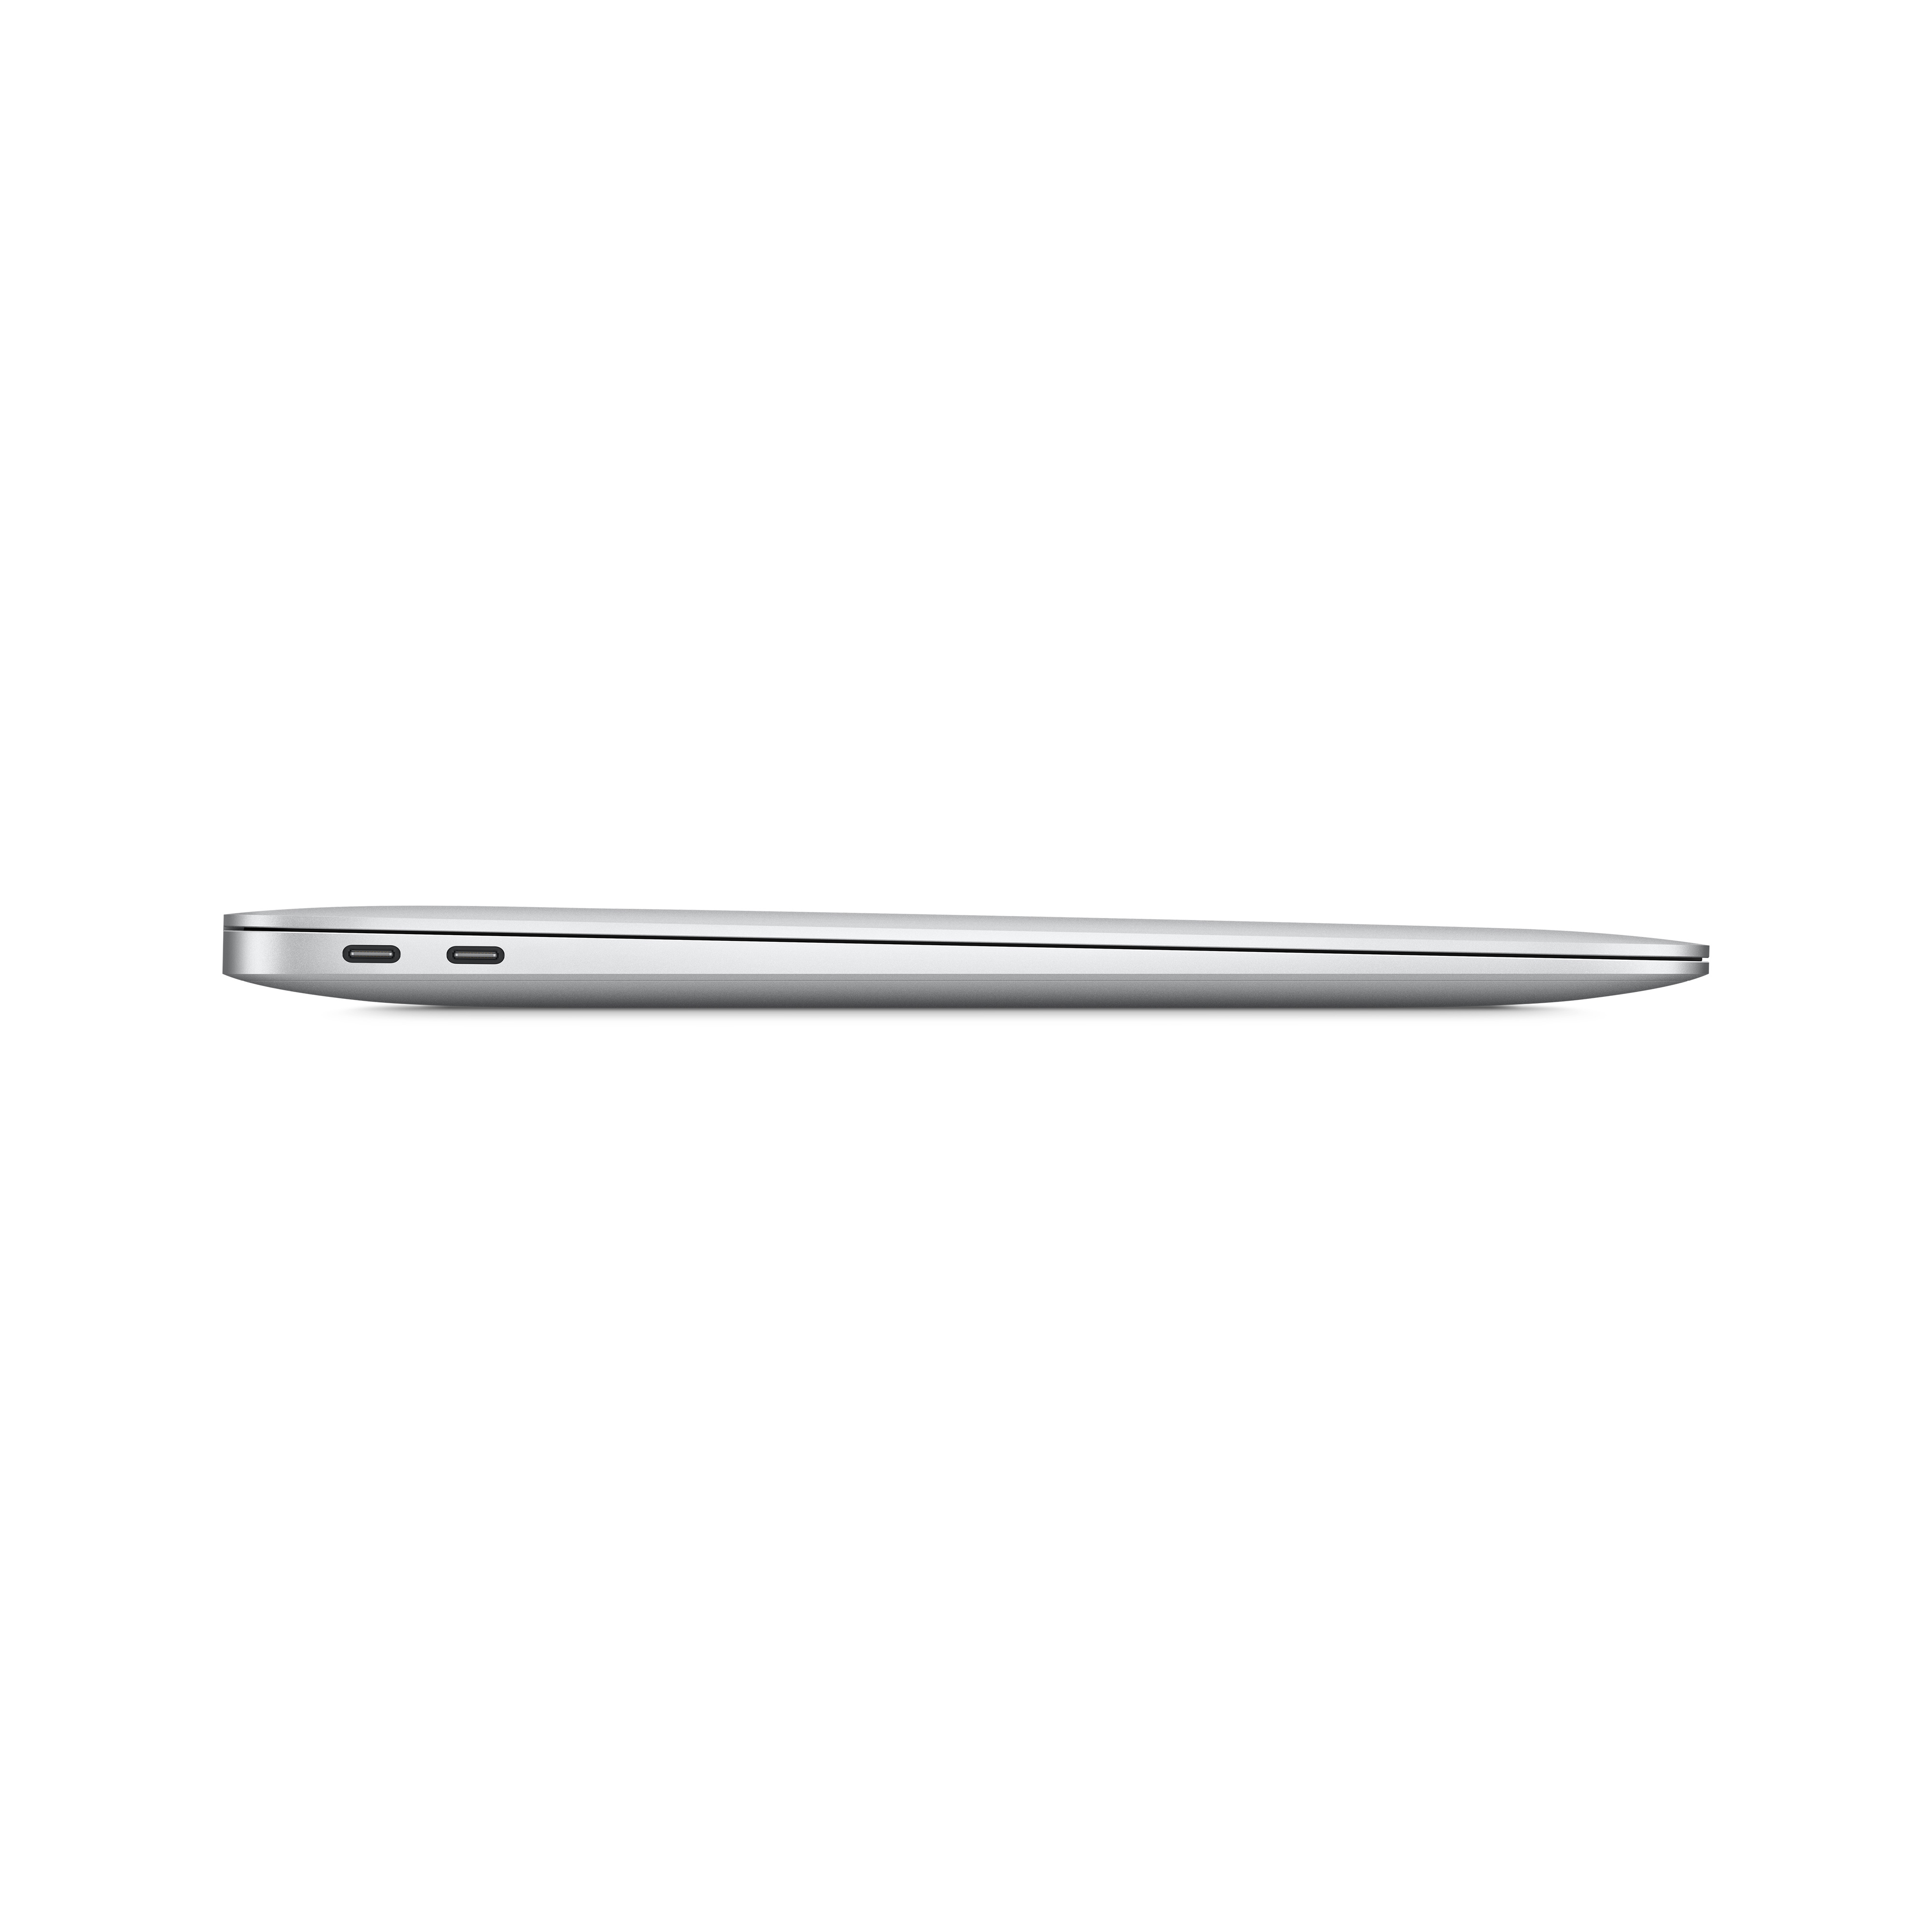 Apple MacBook Air with Retina display